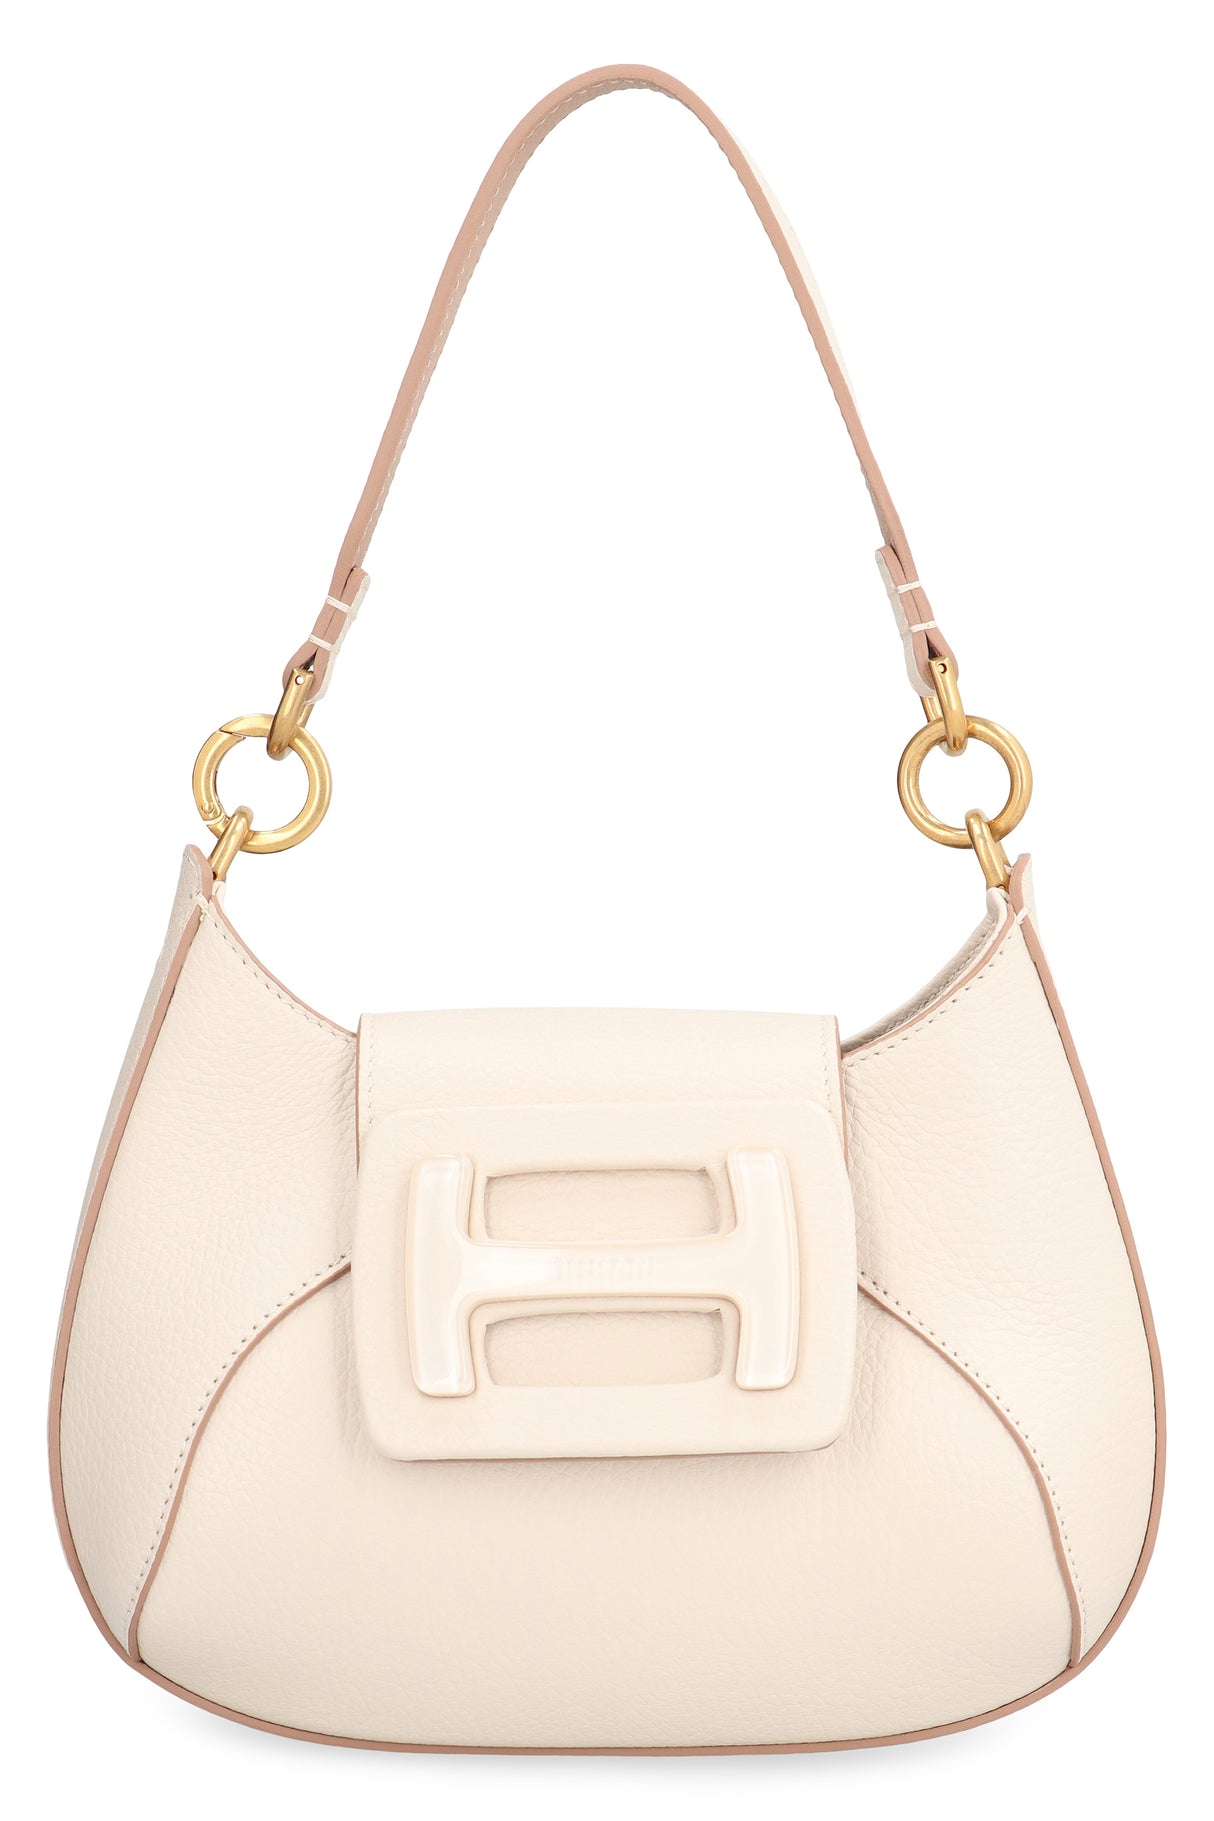 HOGAN Mini White Grainy Leather Hobo Handbag with Gold-Tone Accents